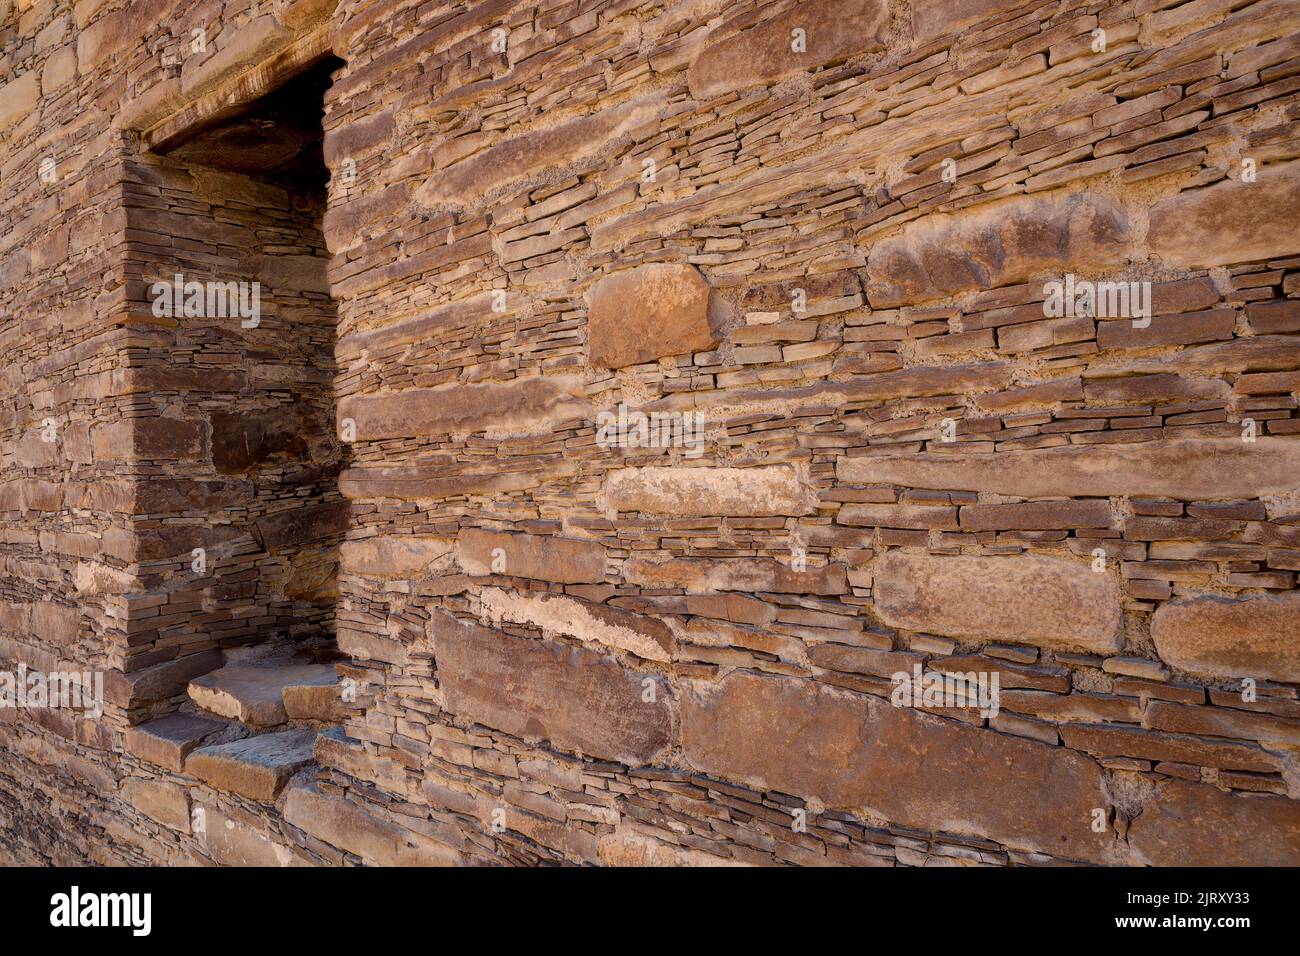 Brickwork in Hungo Pavi, Chaco Culture National Historic Park, New Mexico, USA Stock Photo